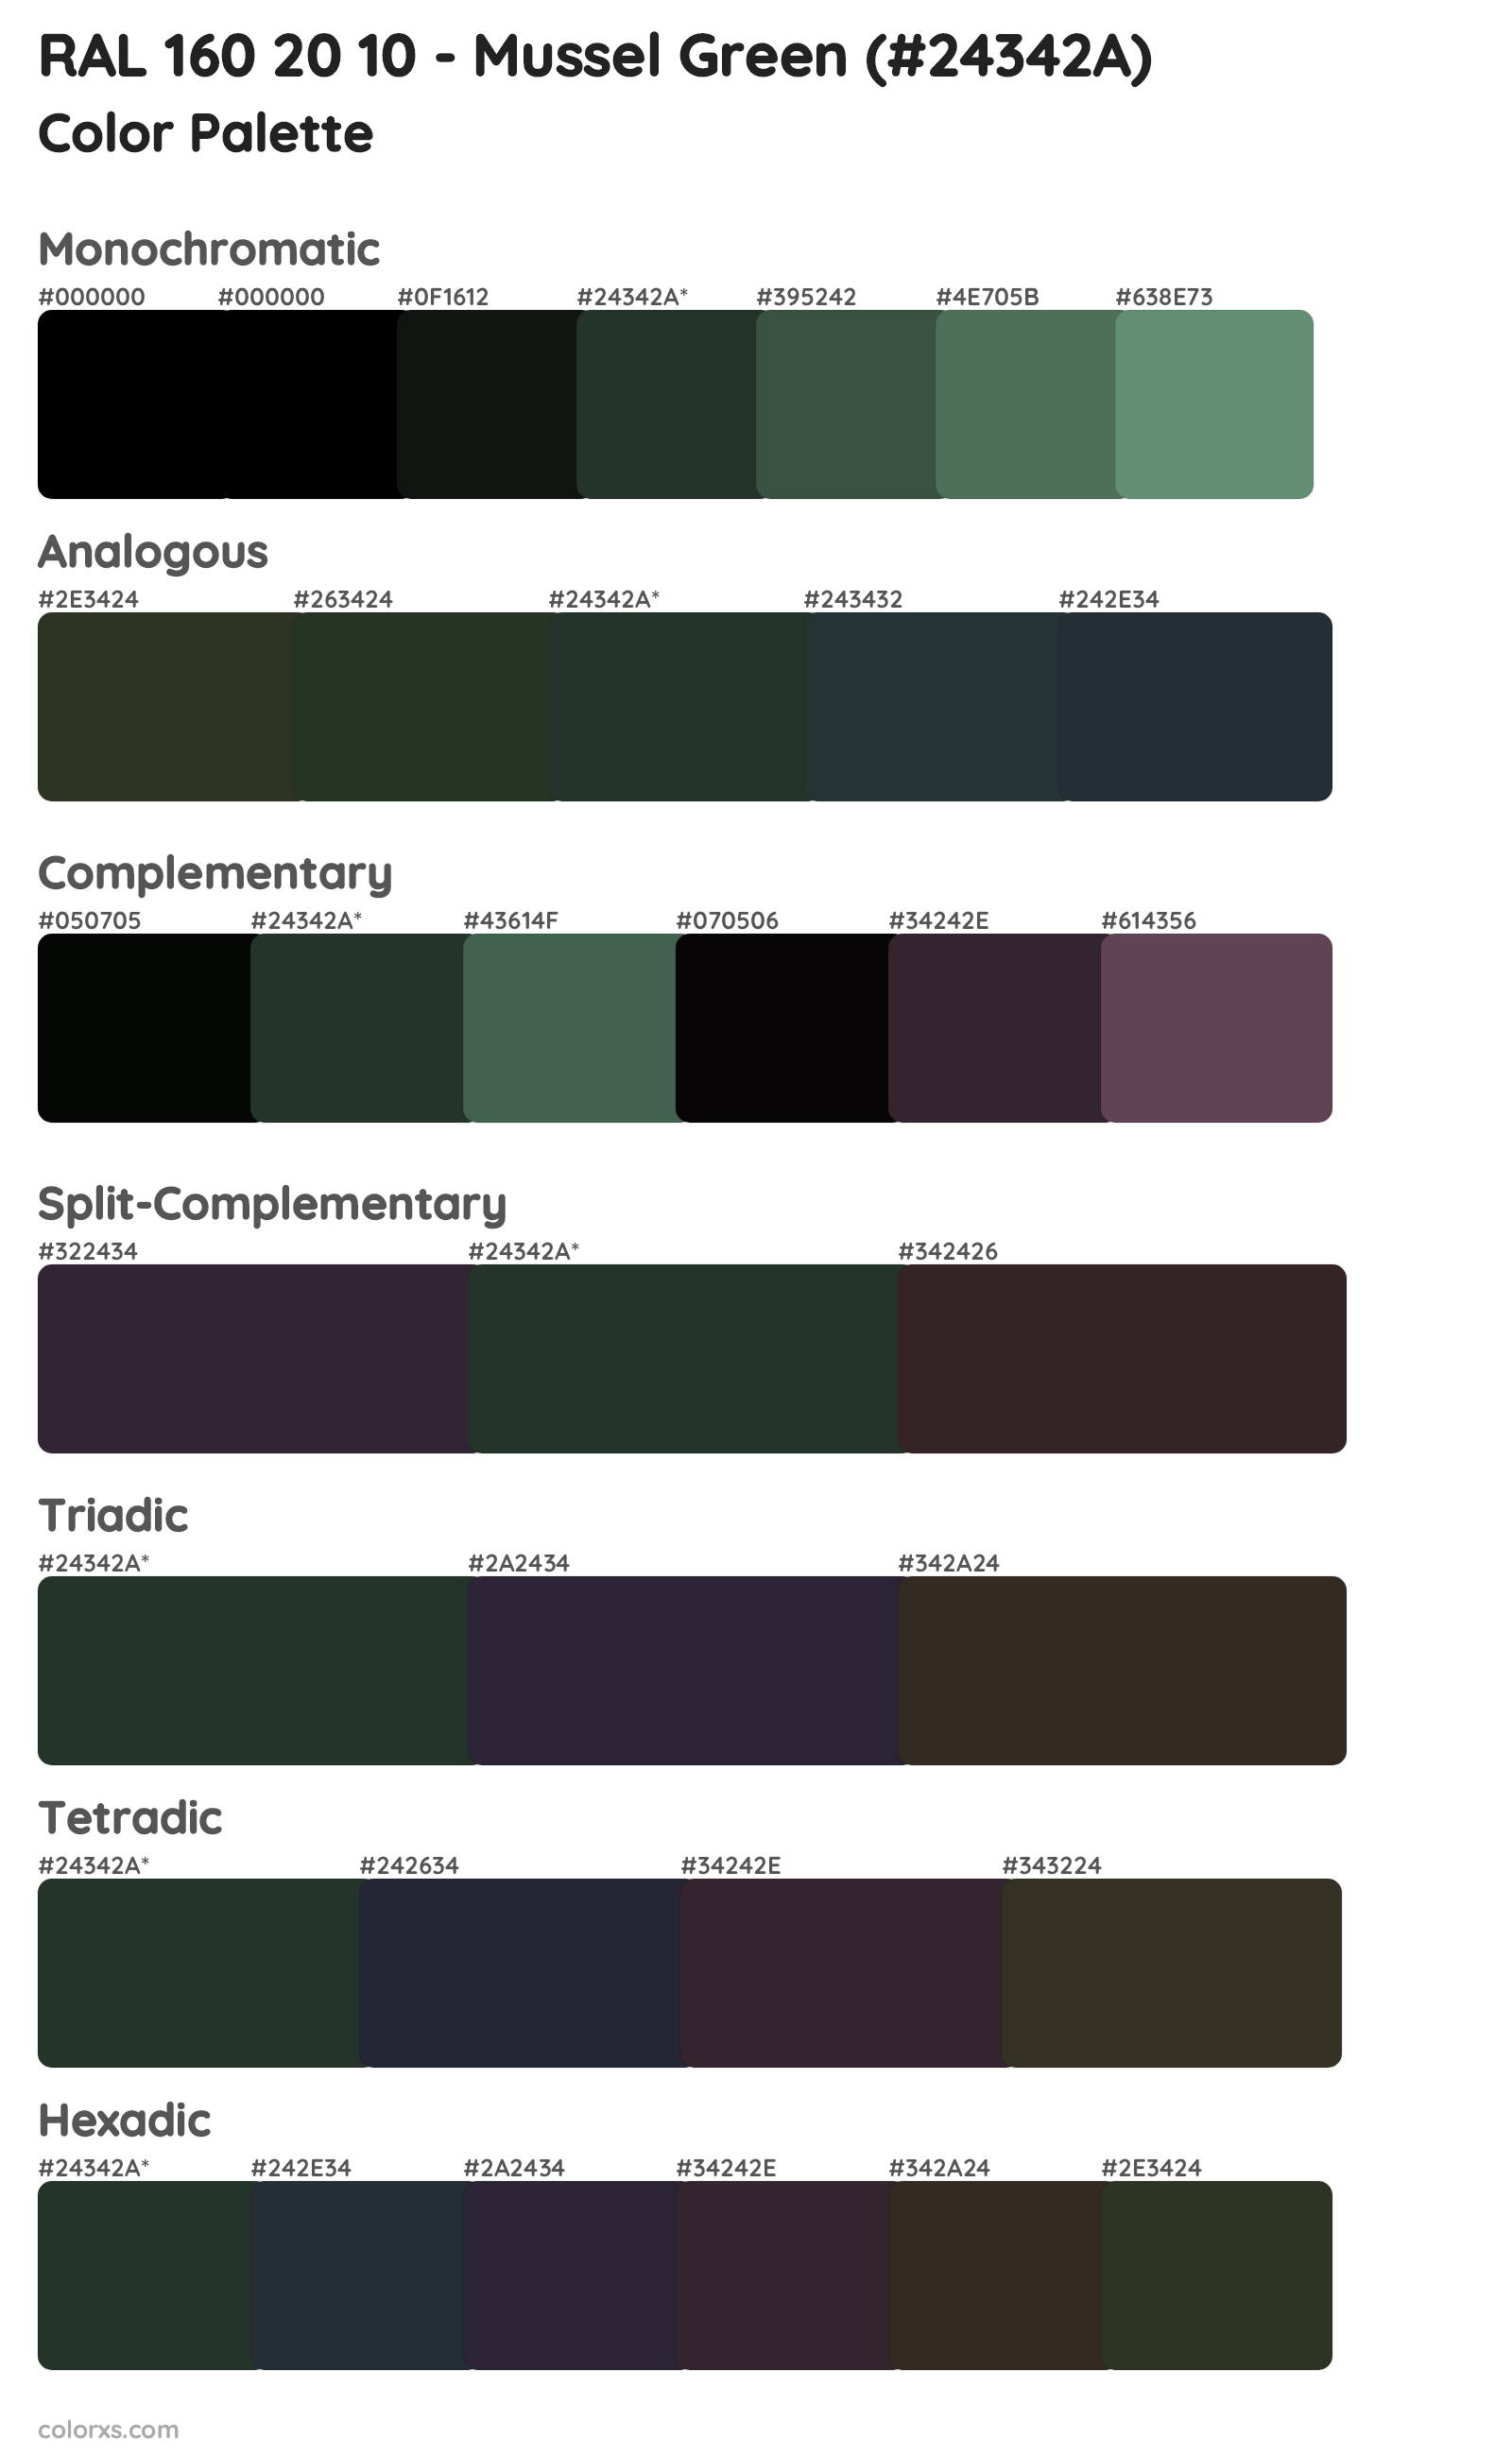 RAL 160 20 10 - Mussel Green Color Scheme Palettes